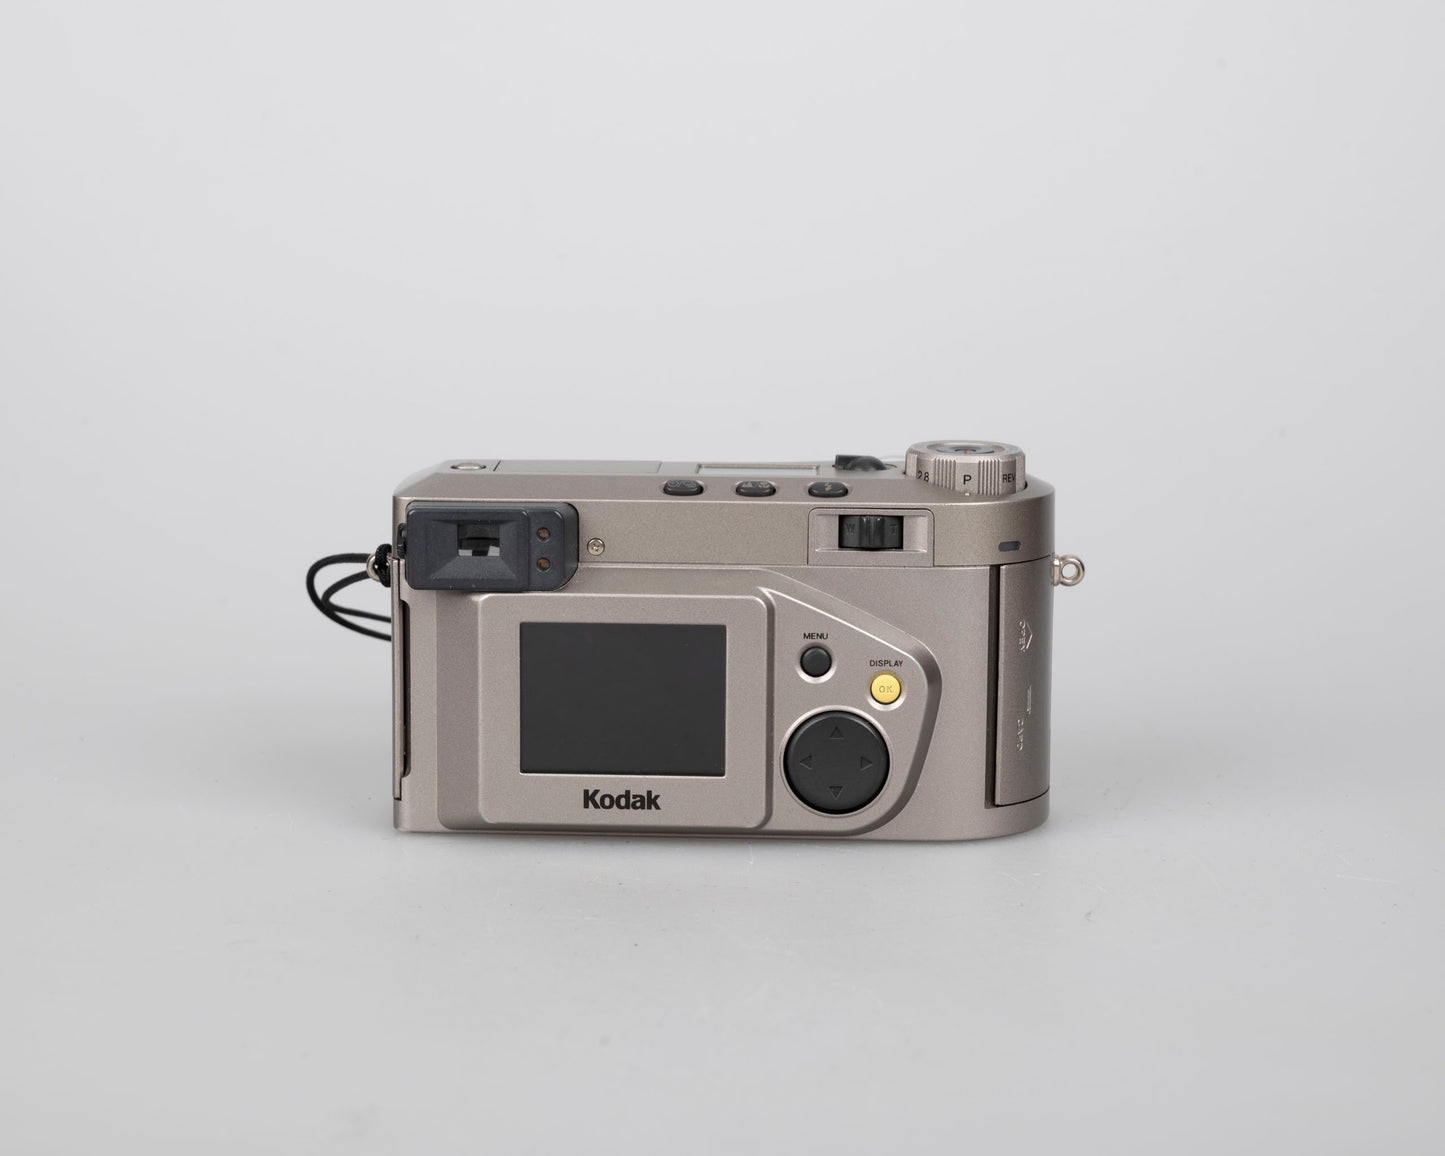 Kodak DC4800 3.1 megapixel CCD digicam w/ 256 MB CF card + battery + charger